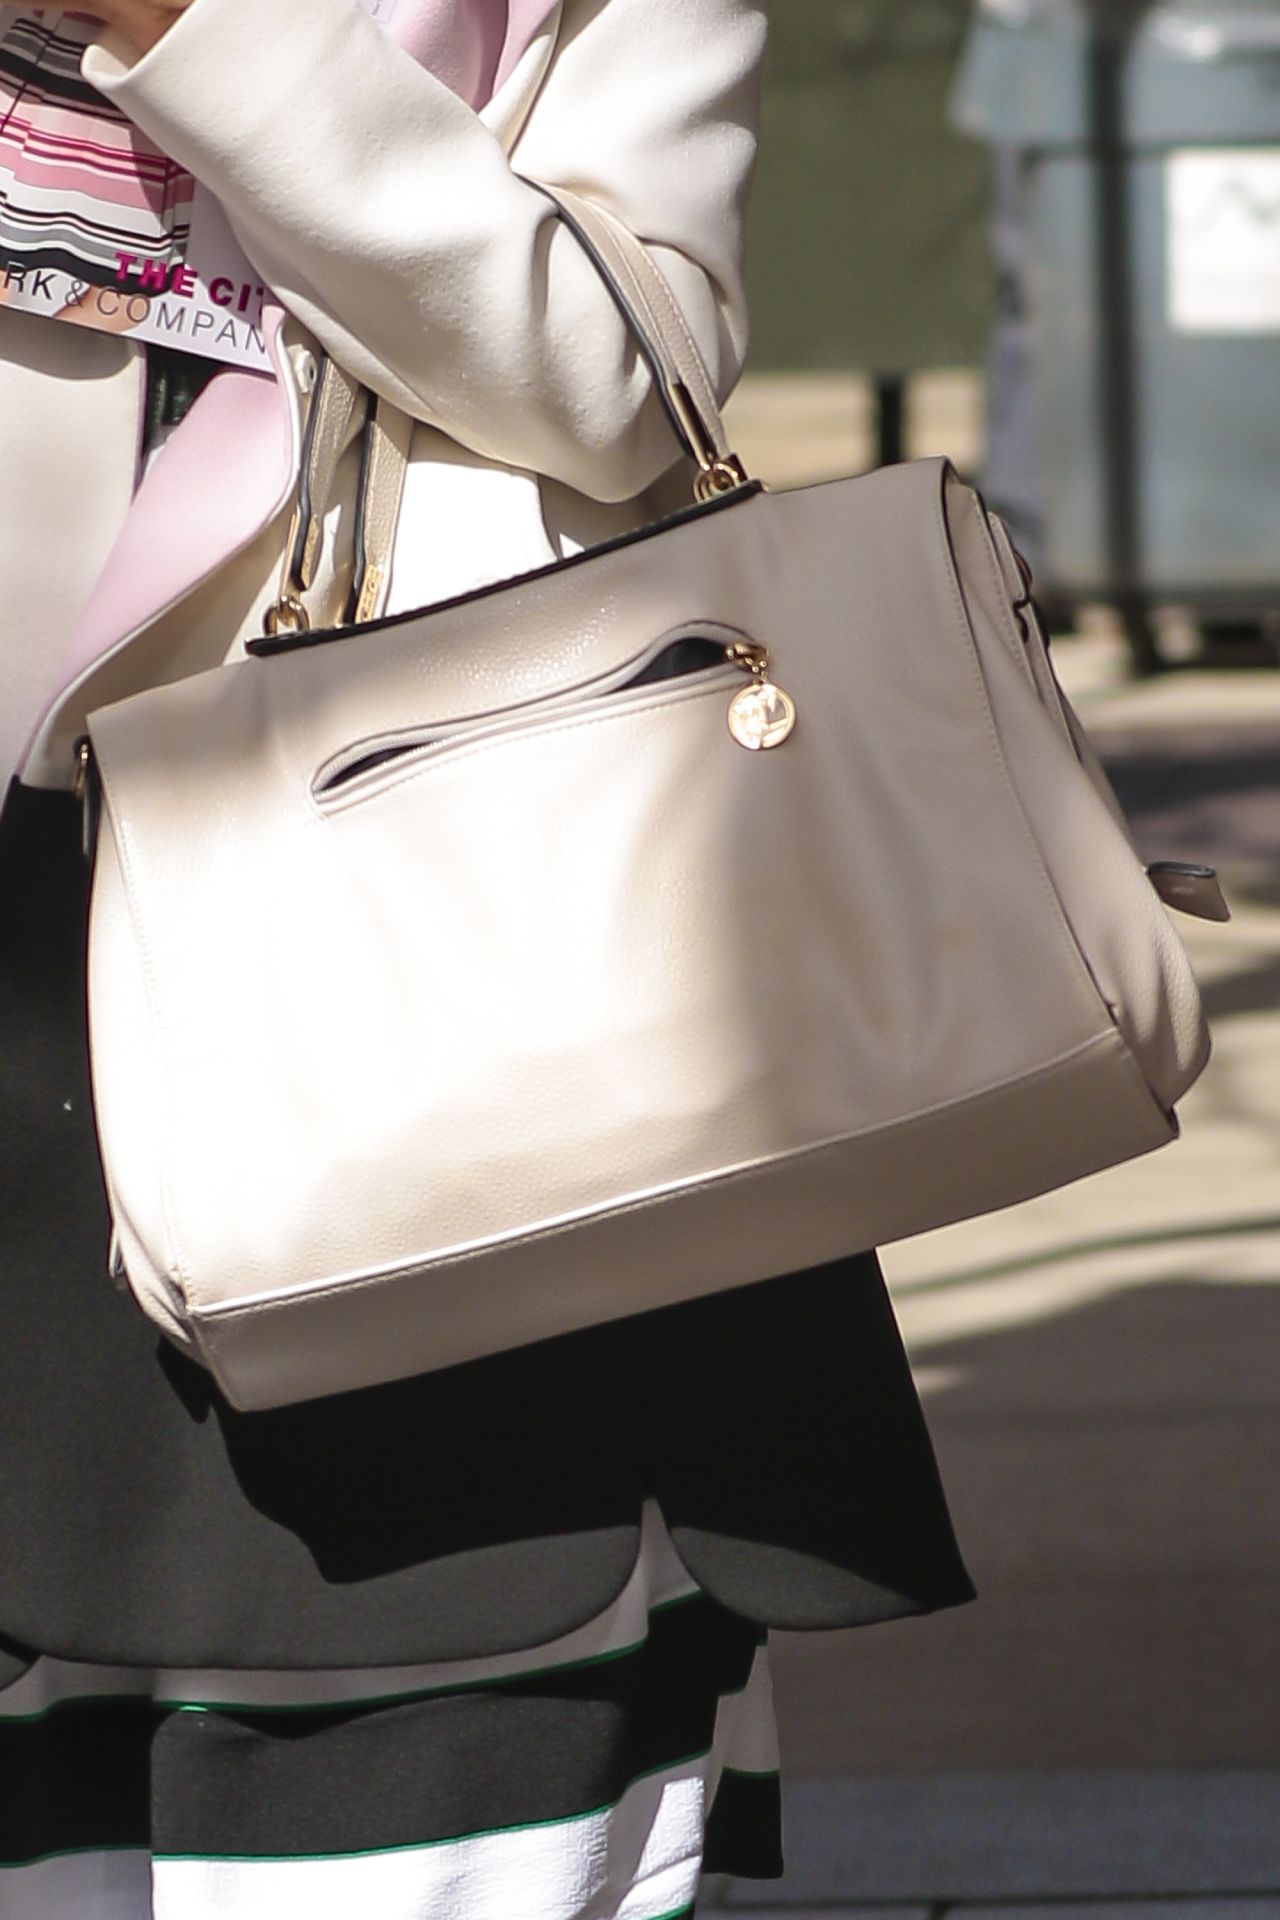 Eva Mendes Carries a Marni Bag to “The View” - PurseBlog